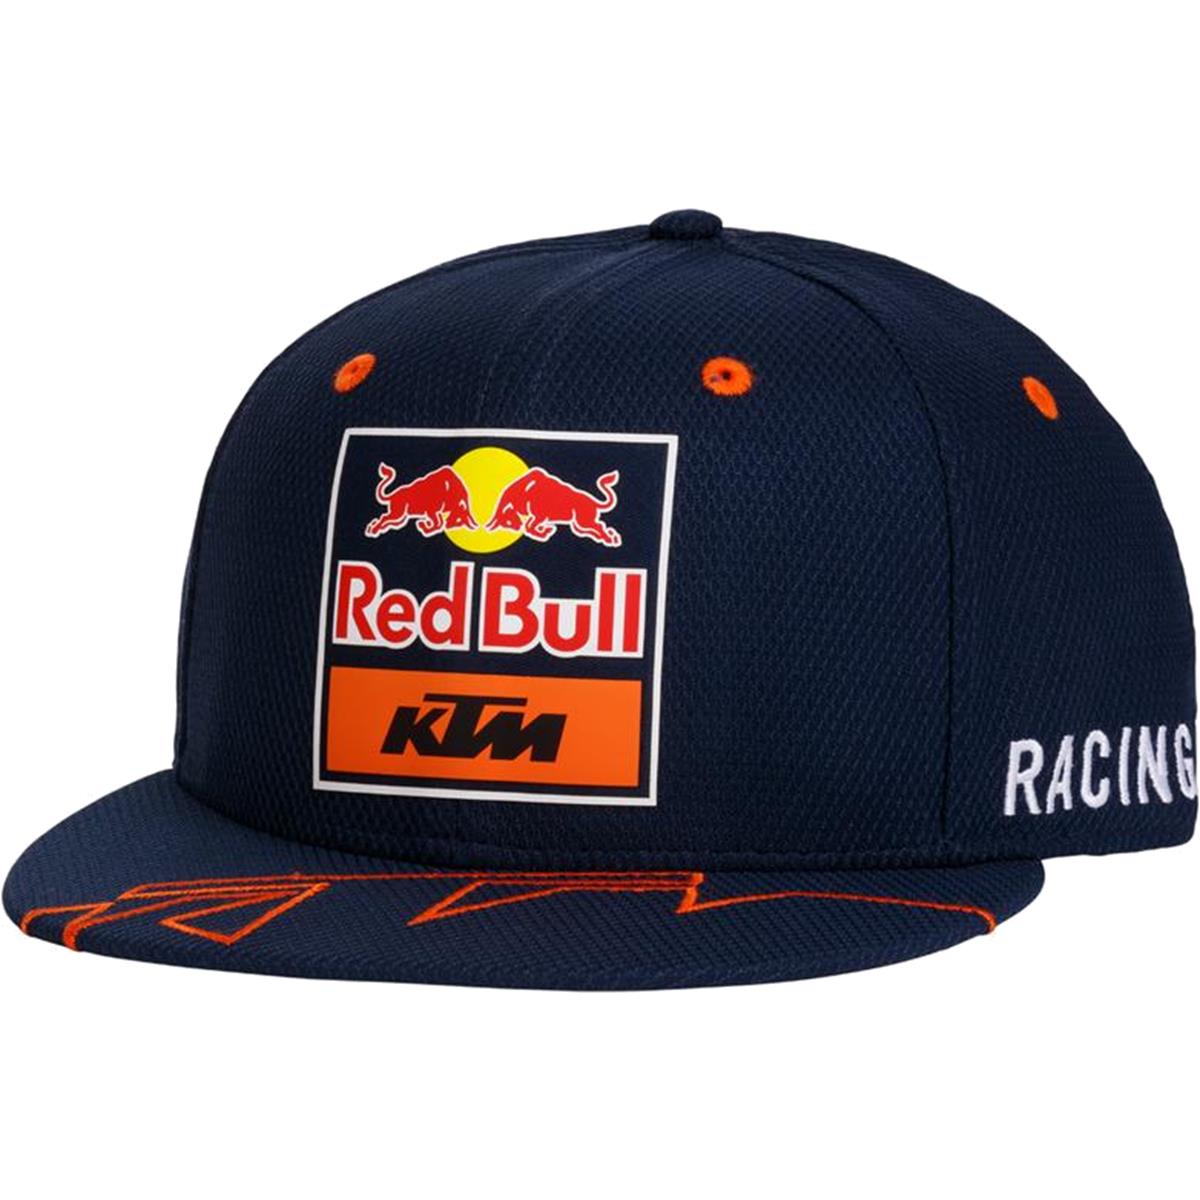 Red Bull Bimbo Cappellino Snapback KTM New Era OTL Navy/Arancione